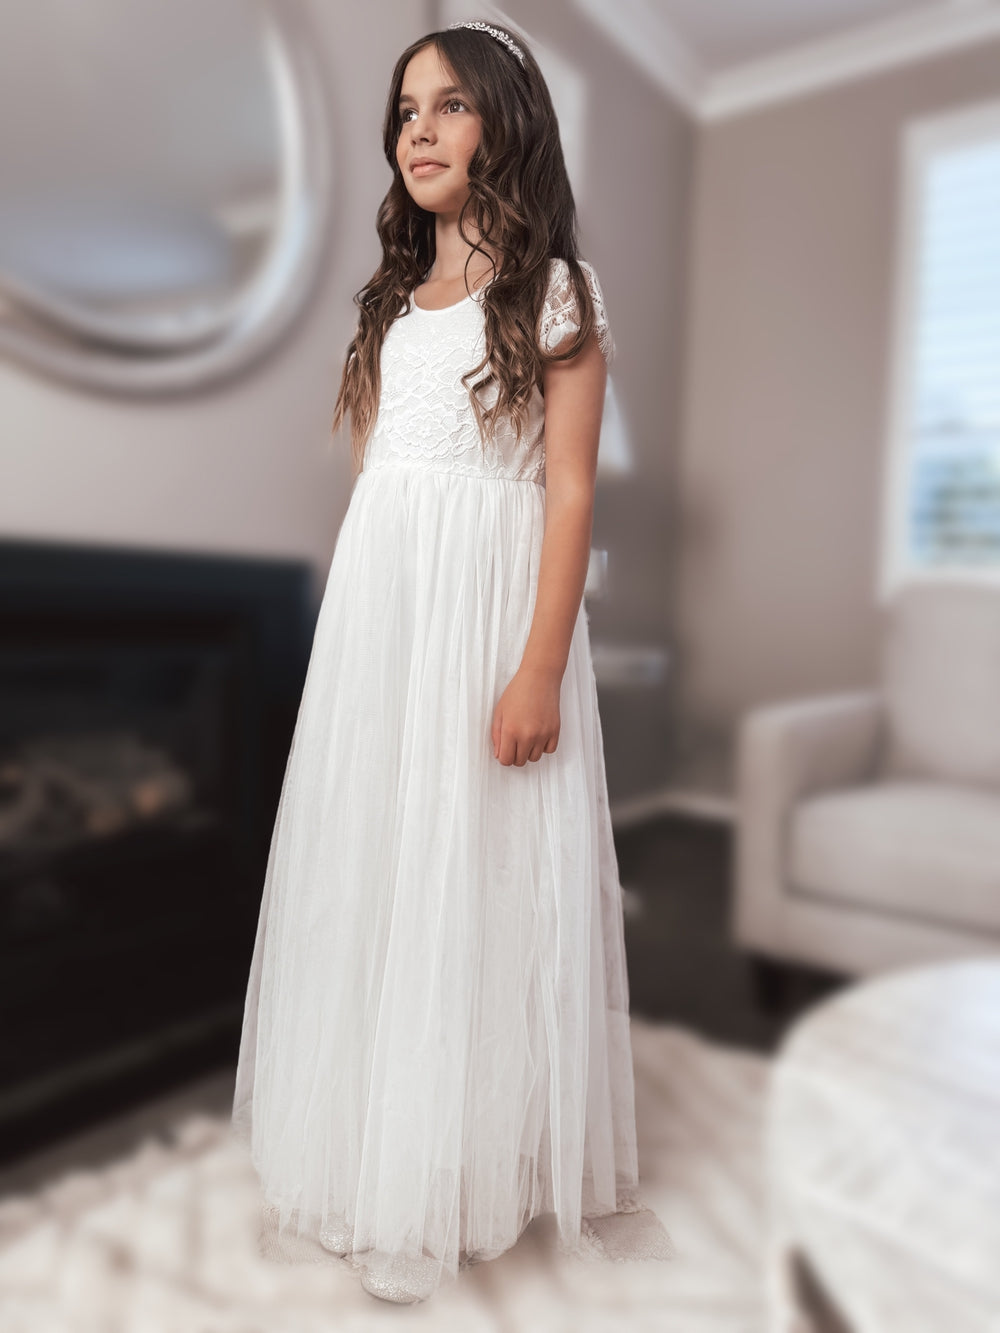 Celeste Girls White Lace & Tulle Dress - Communion DressesWhite first communion dress - full length dress